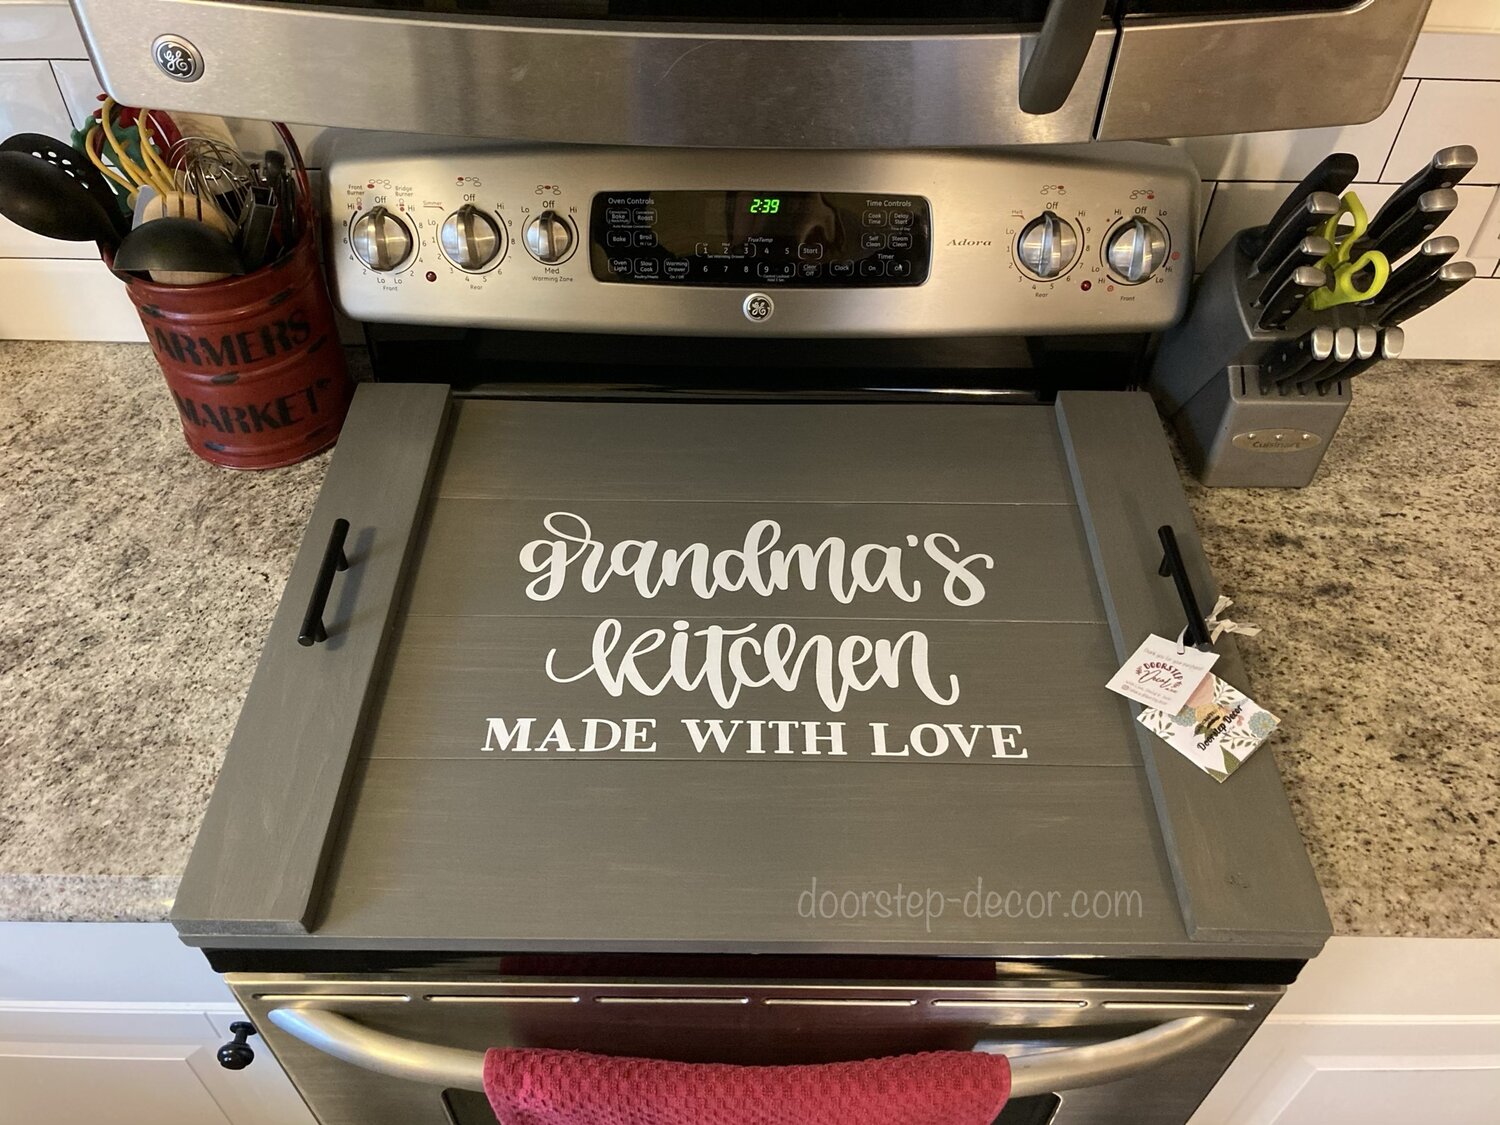 About - Grandma's Kitchen